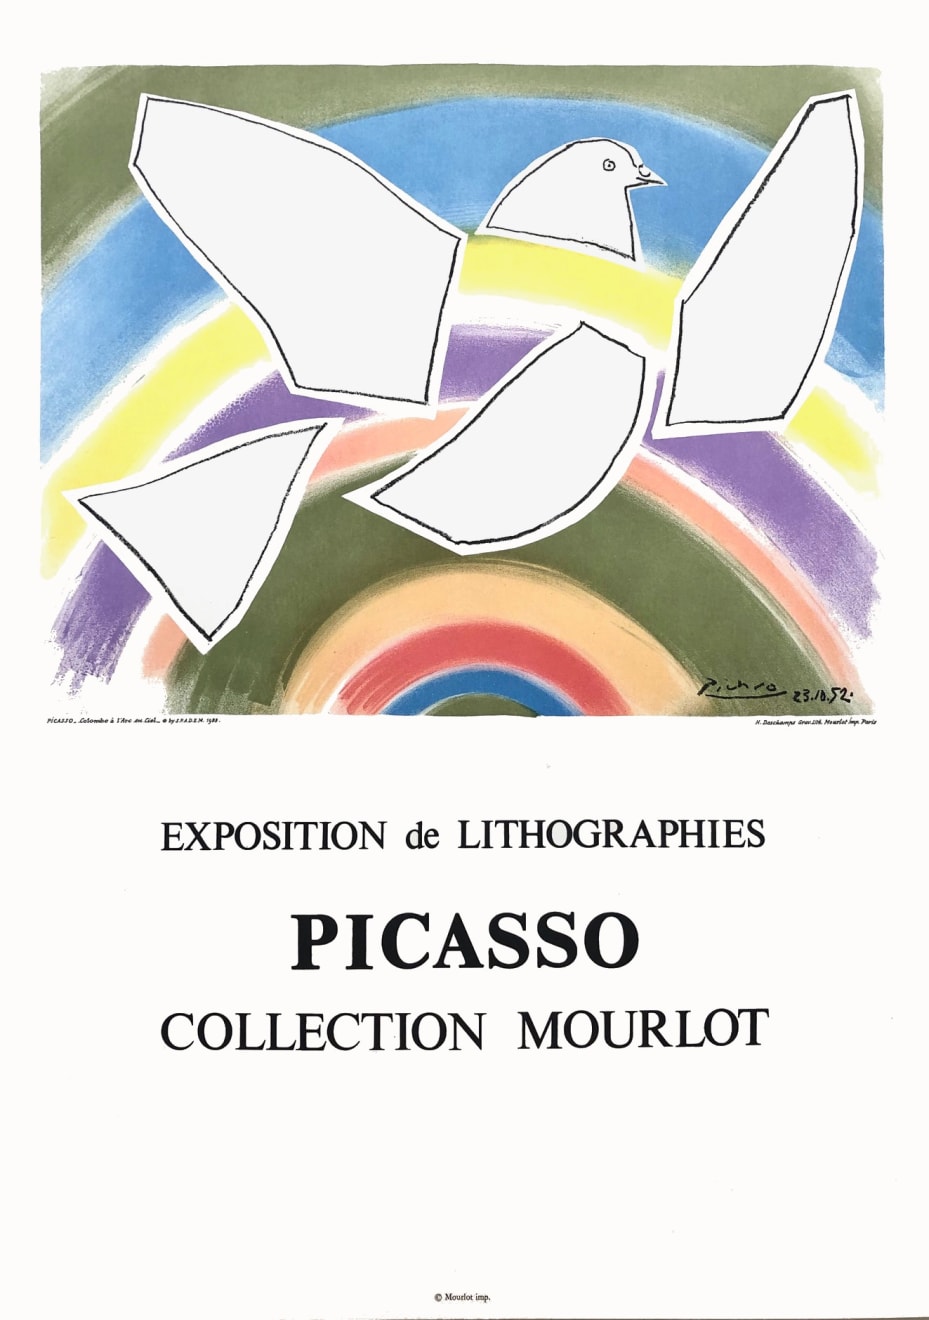 Pablo Picasso, ‘Exposition de Lithographies’ Picasso Poster , 1988